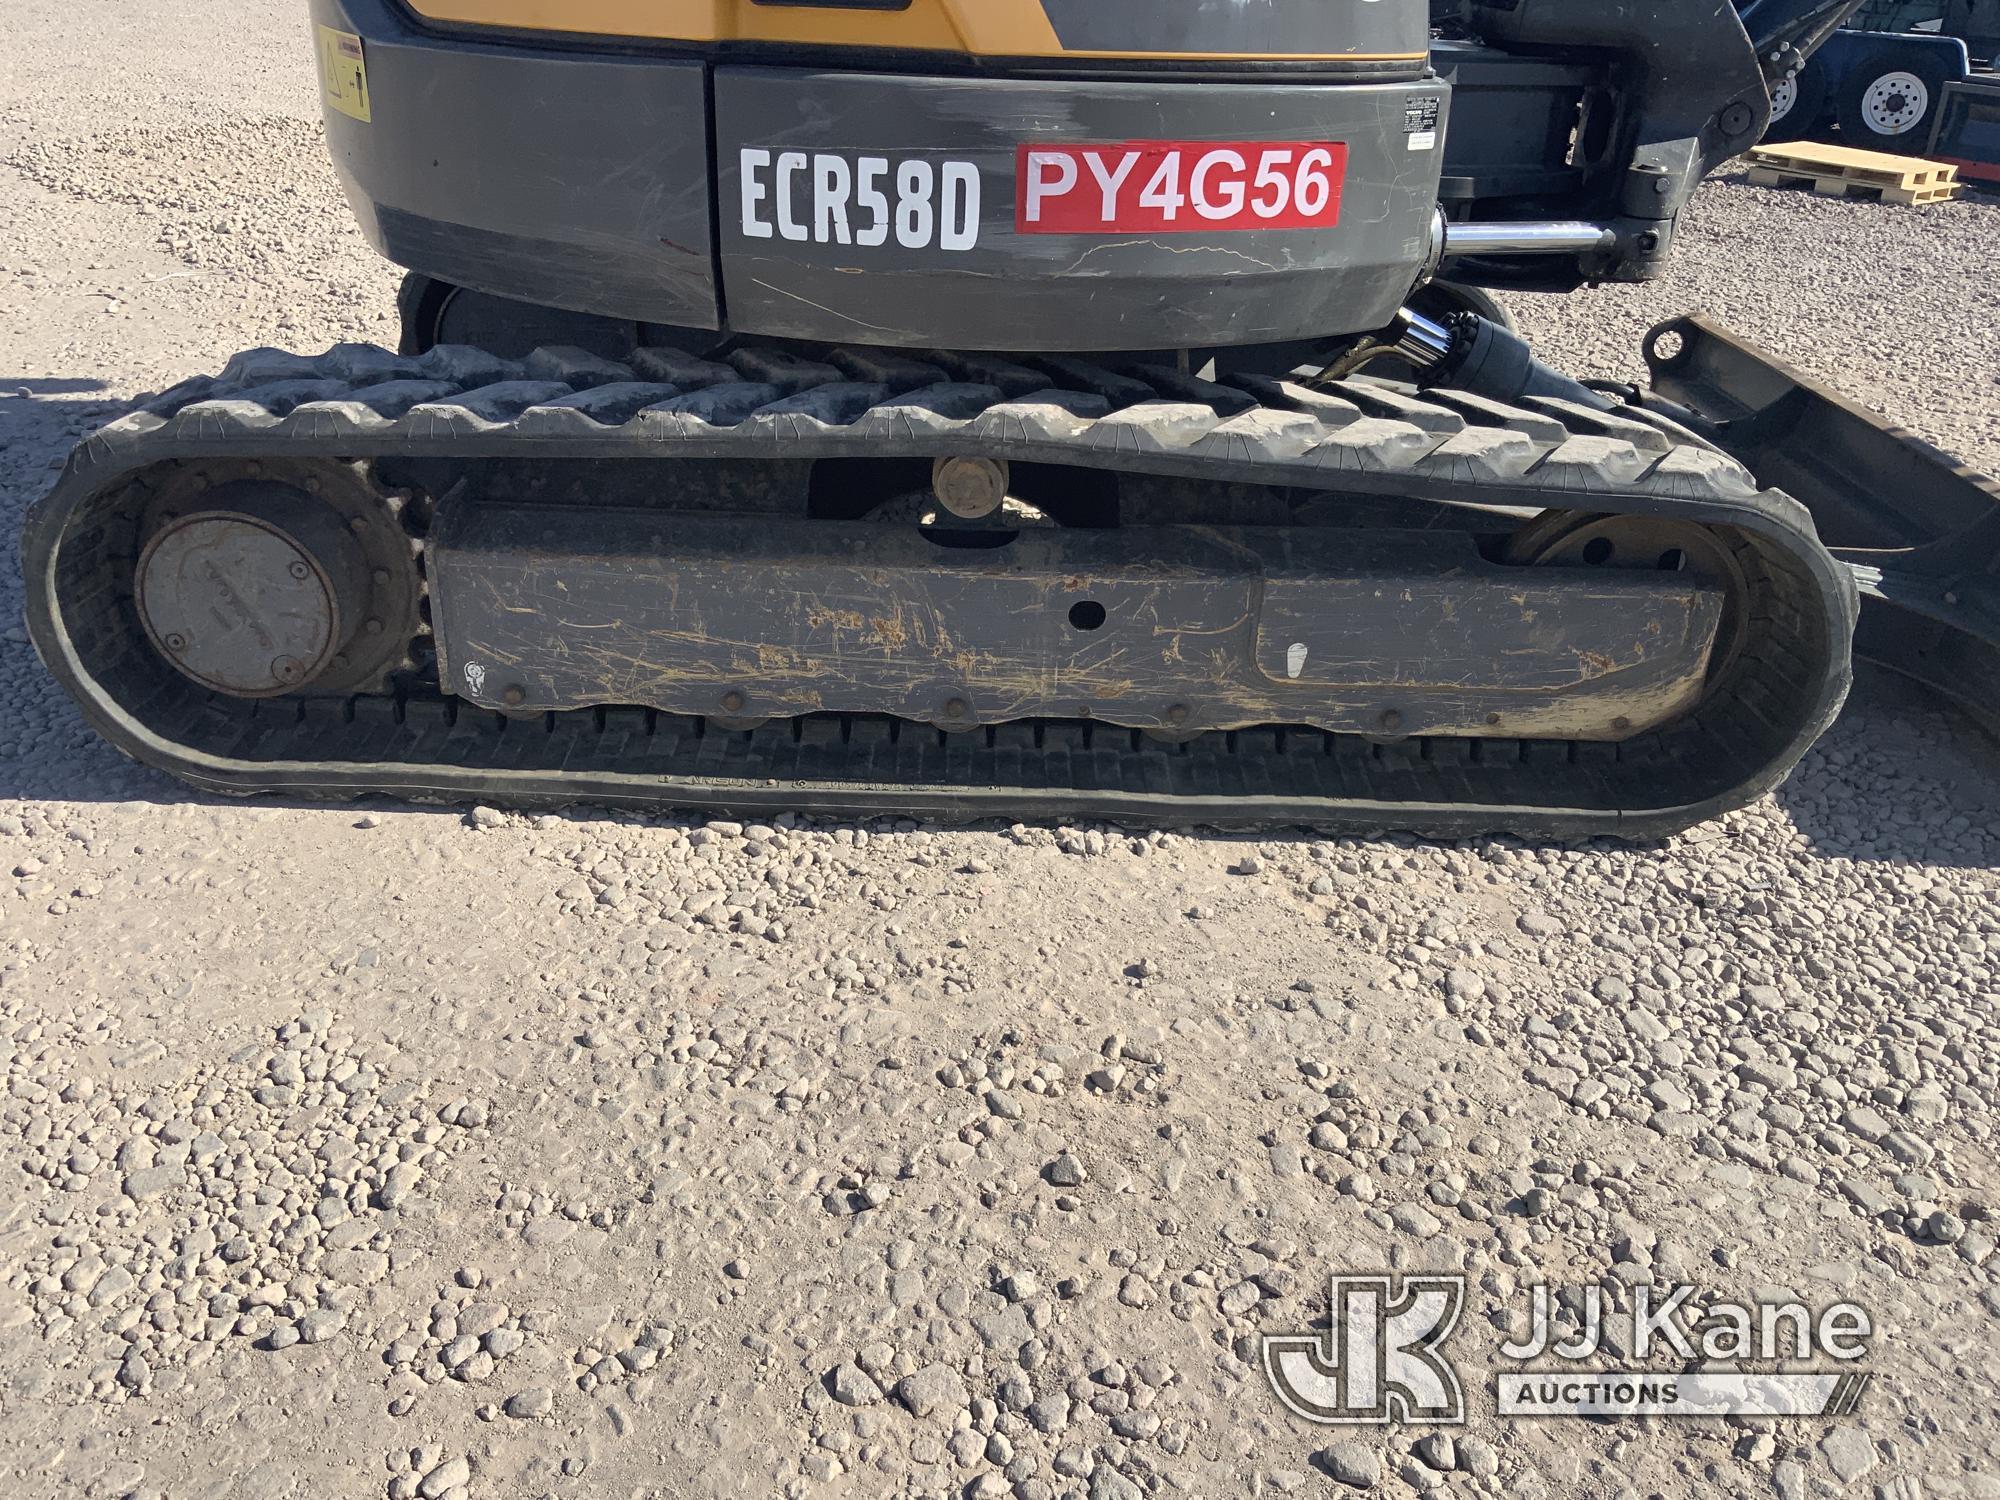 (Dixon, CA) 2017 Volvo ECR58D Hydraulic Crawler Excavator, Backfill blade, Thumb, Rubber tracks, ORO